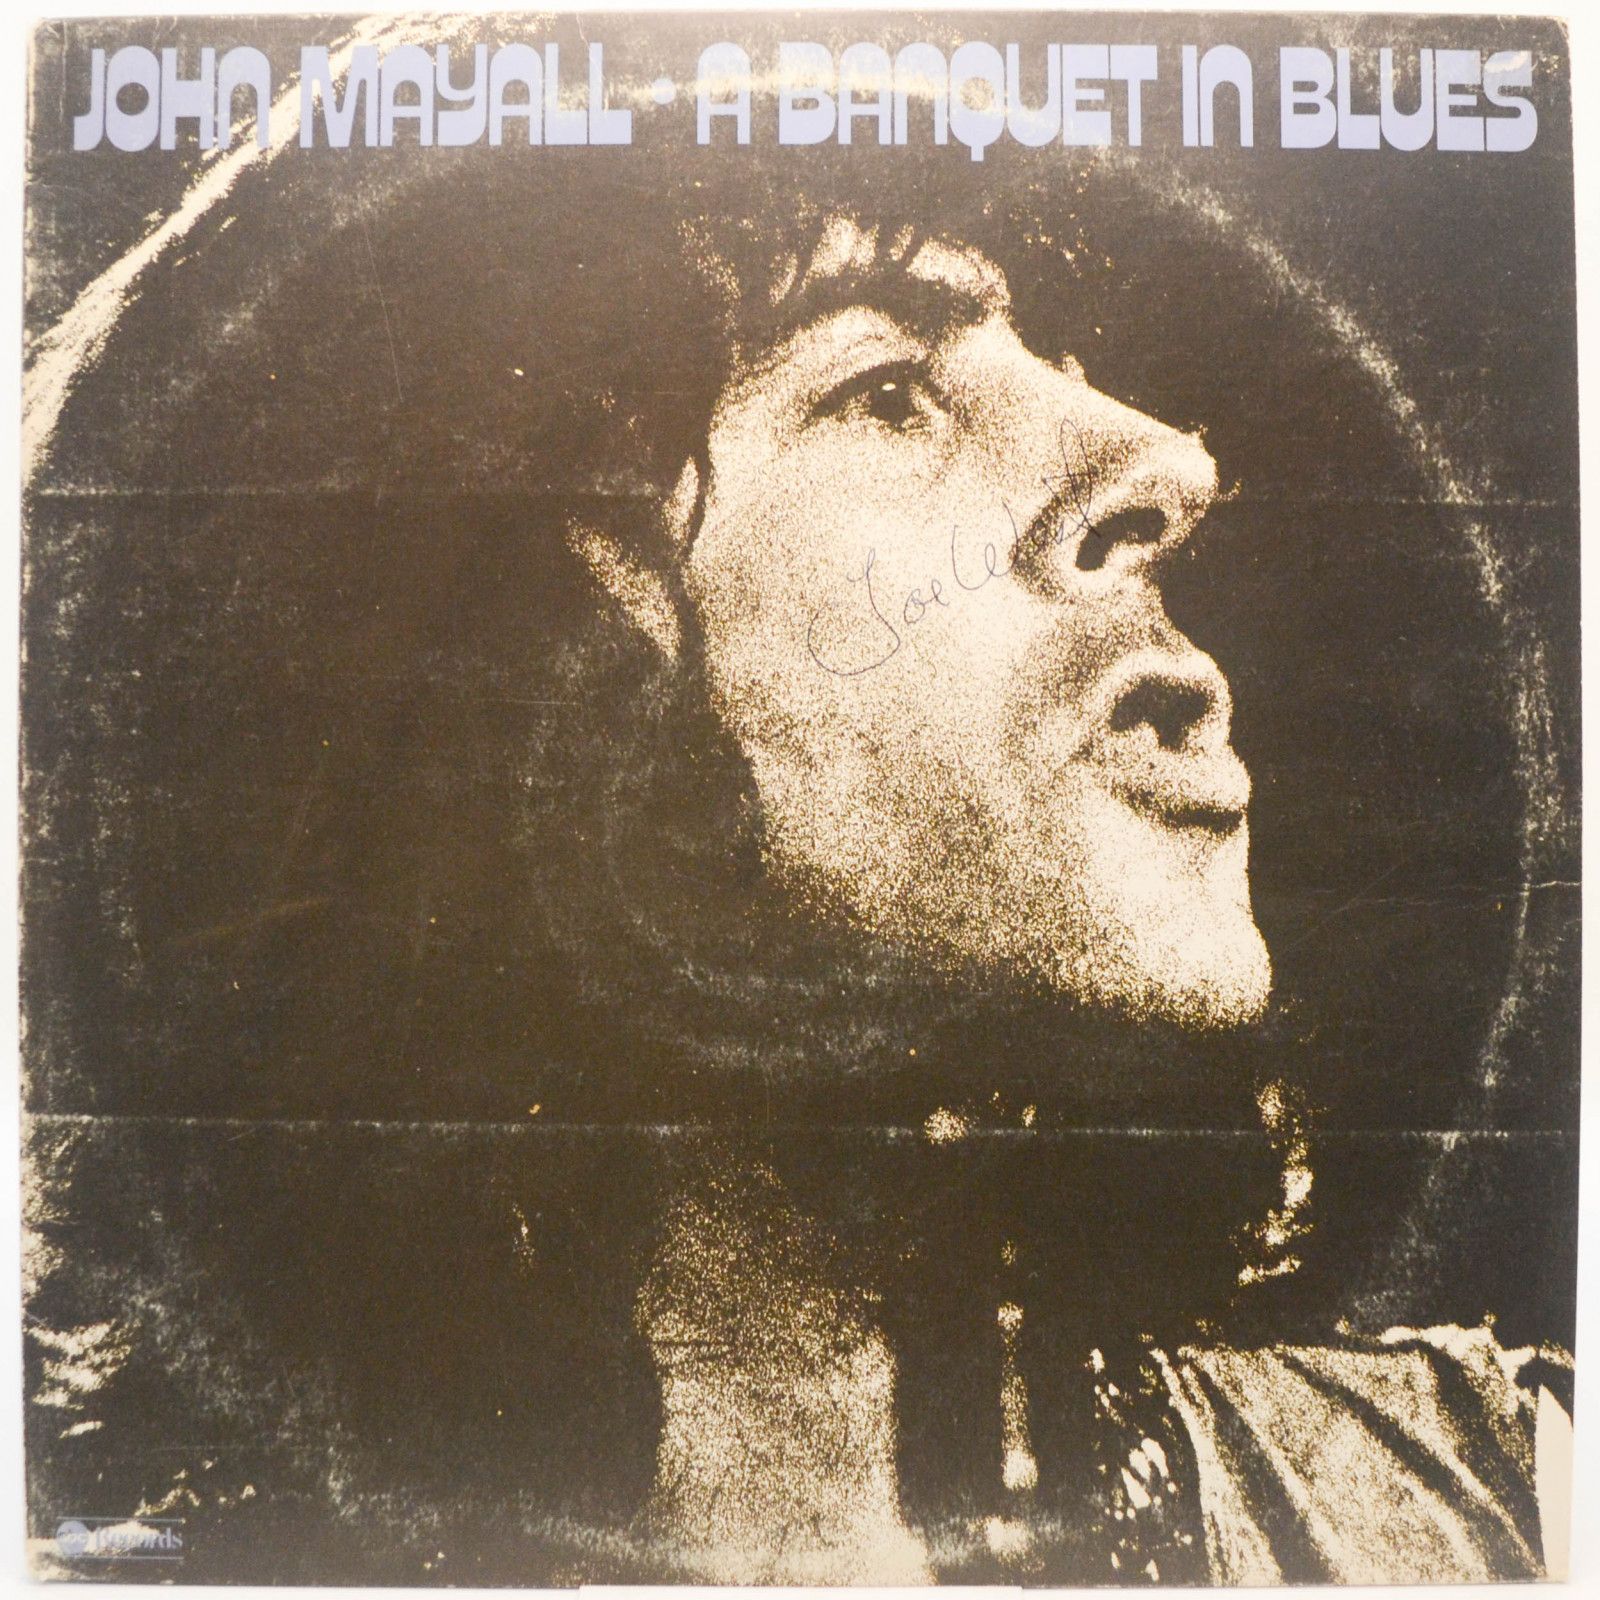 John Mayall — A Banquet In Blues (USA), 1976